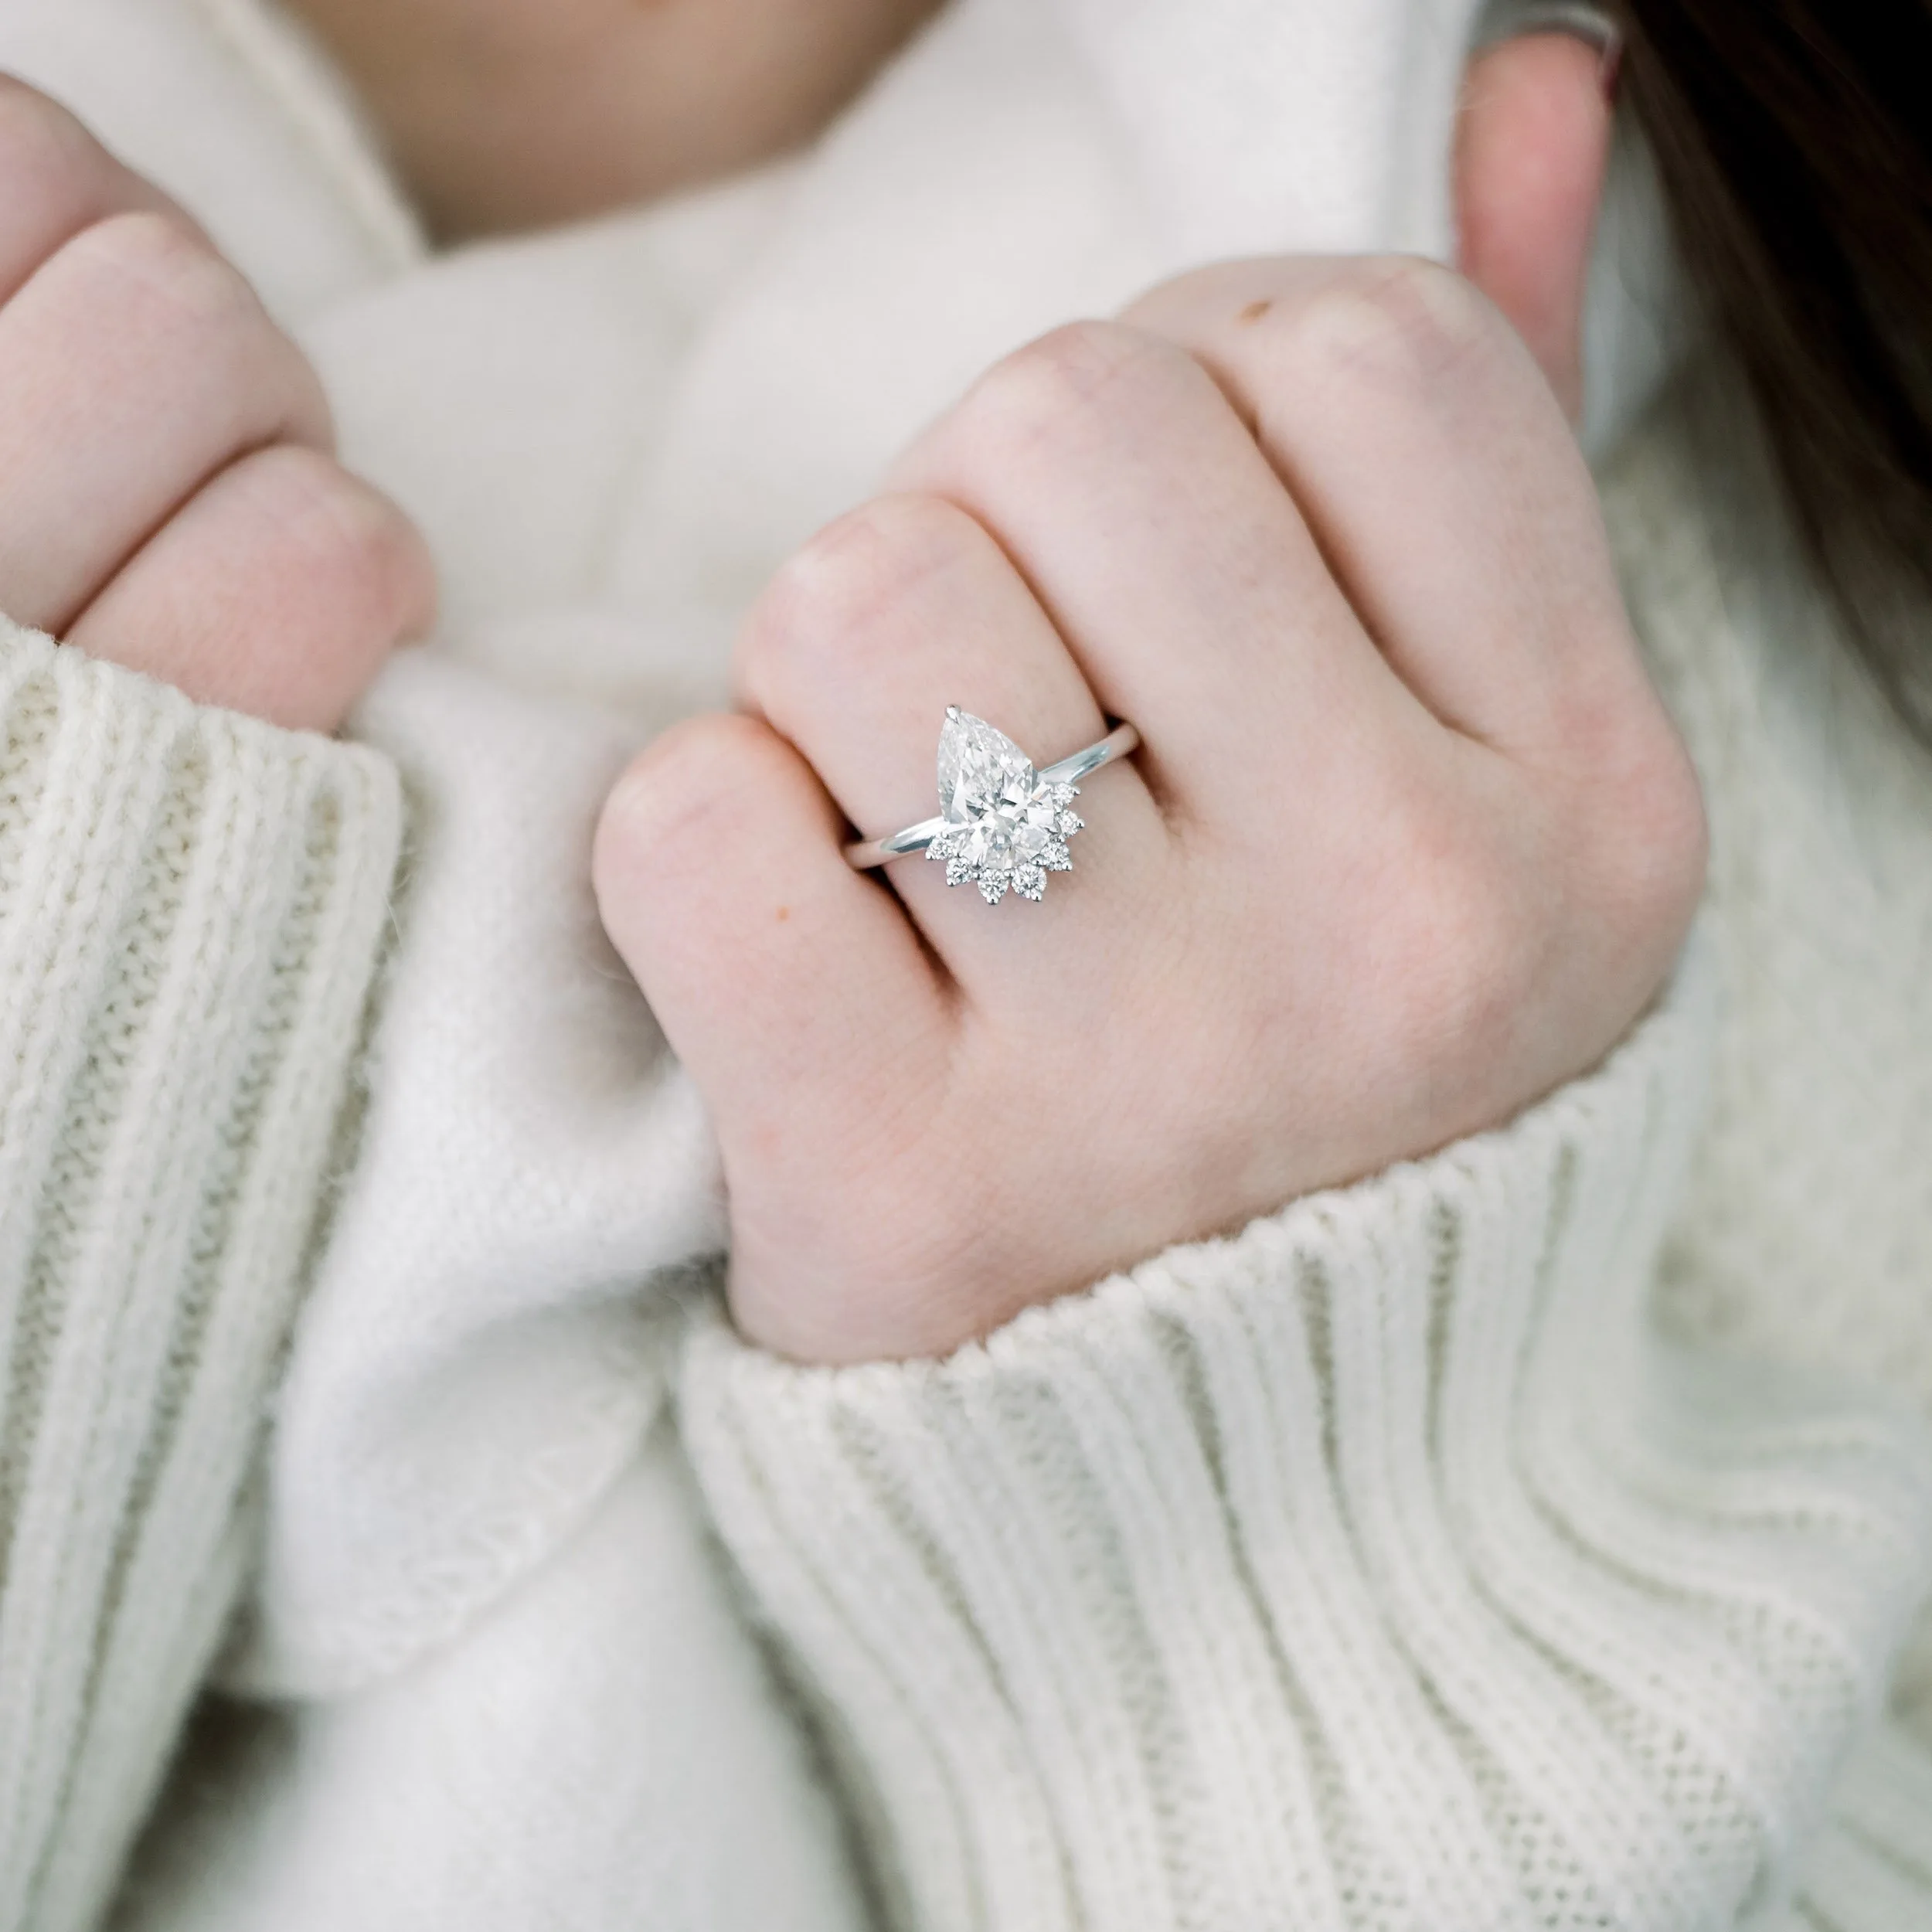 White Gold 2 ct Pear Lab Created Diamond Ring with Custom Half Halo Ada Diamonds Design AD-179 on Model